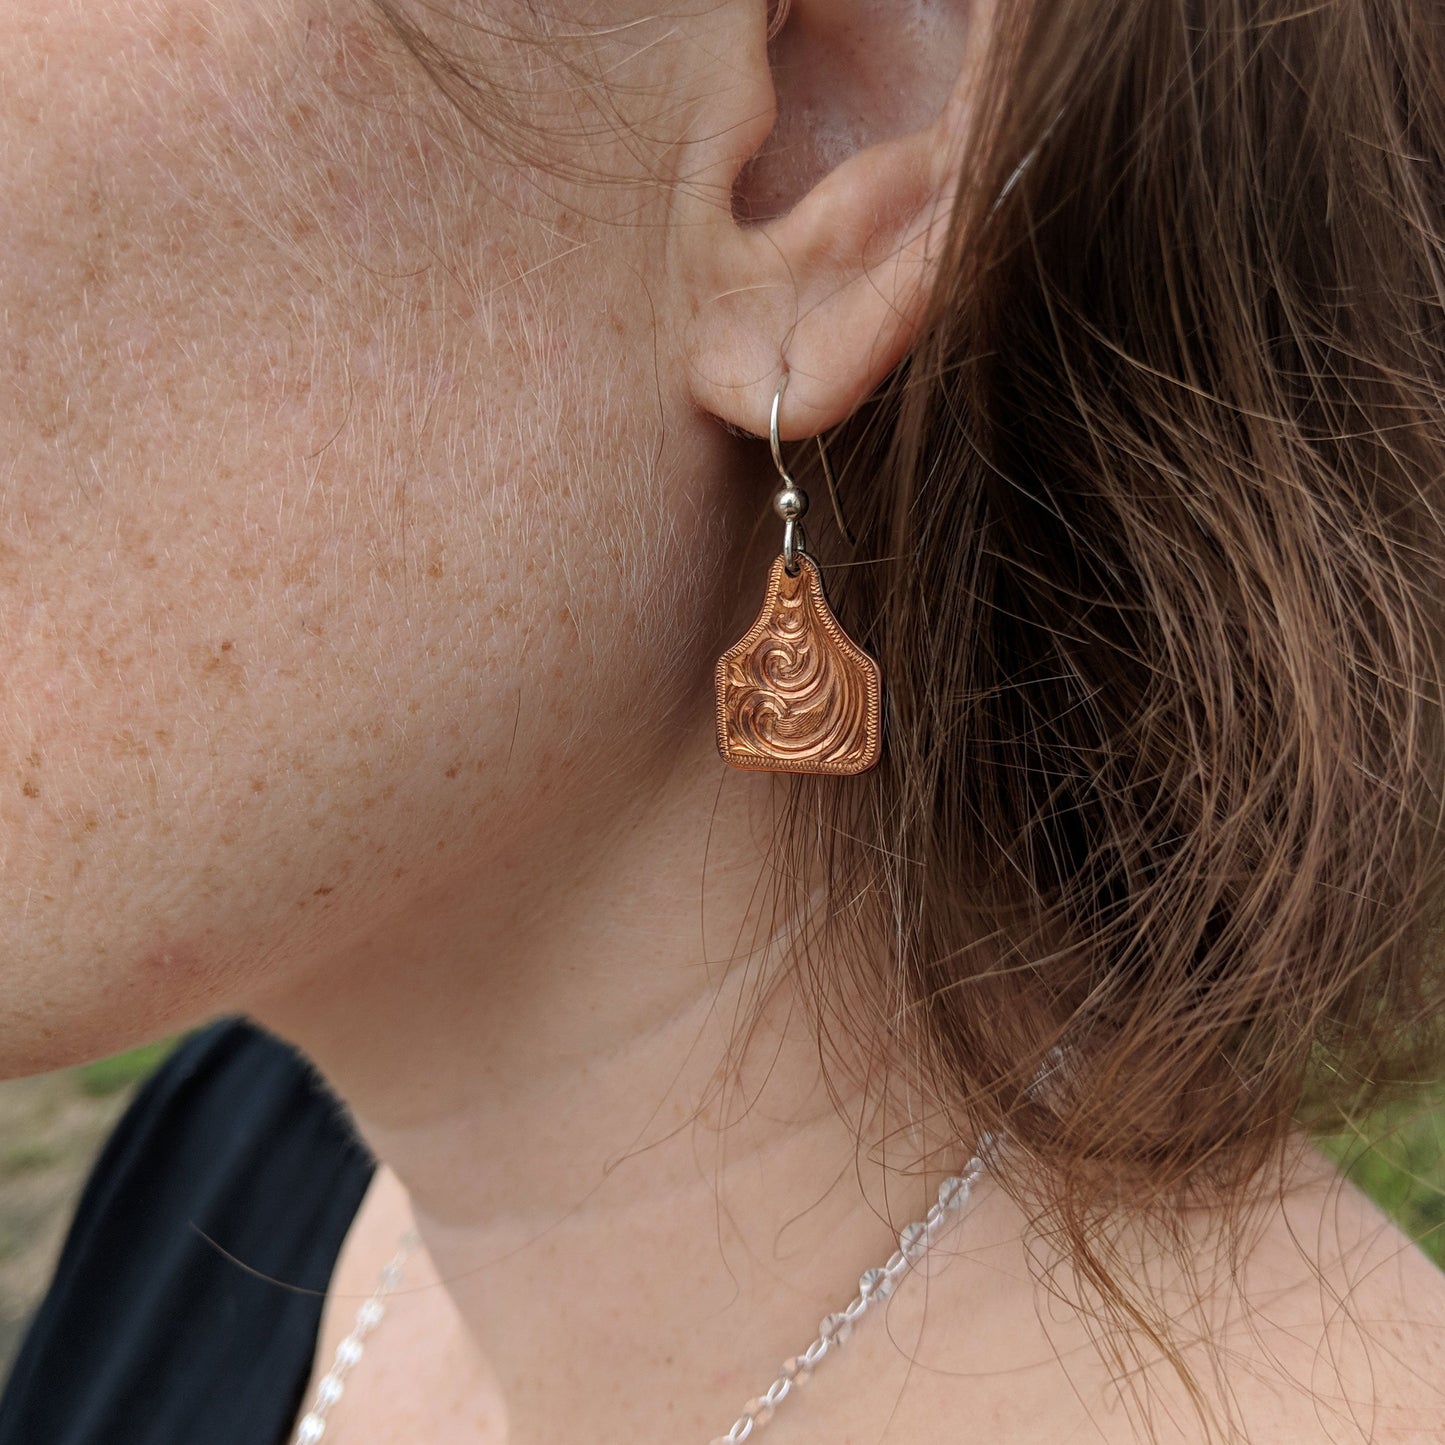 Copper Engraved Cow Tag Earrings, Western Earring Design EAR00004 by Loreena Rose